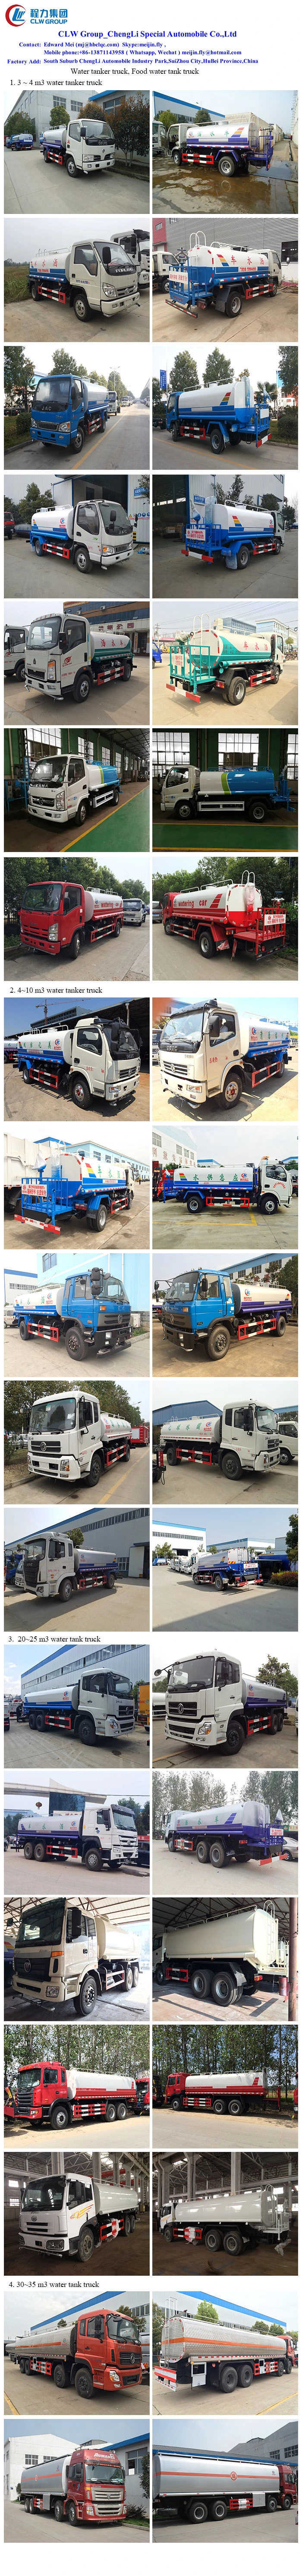 Dongfeng 304 Stainless Steel Water Tank Truck 8000~12000 Liter Ss Water Trucks